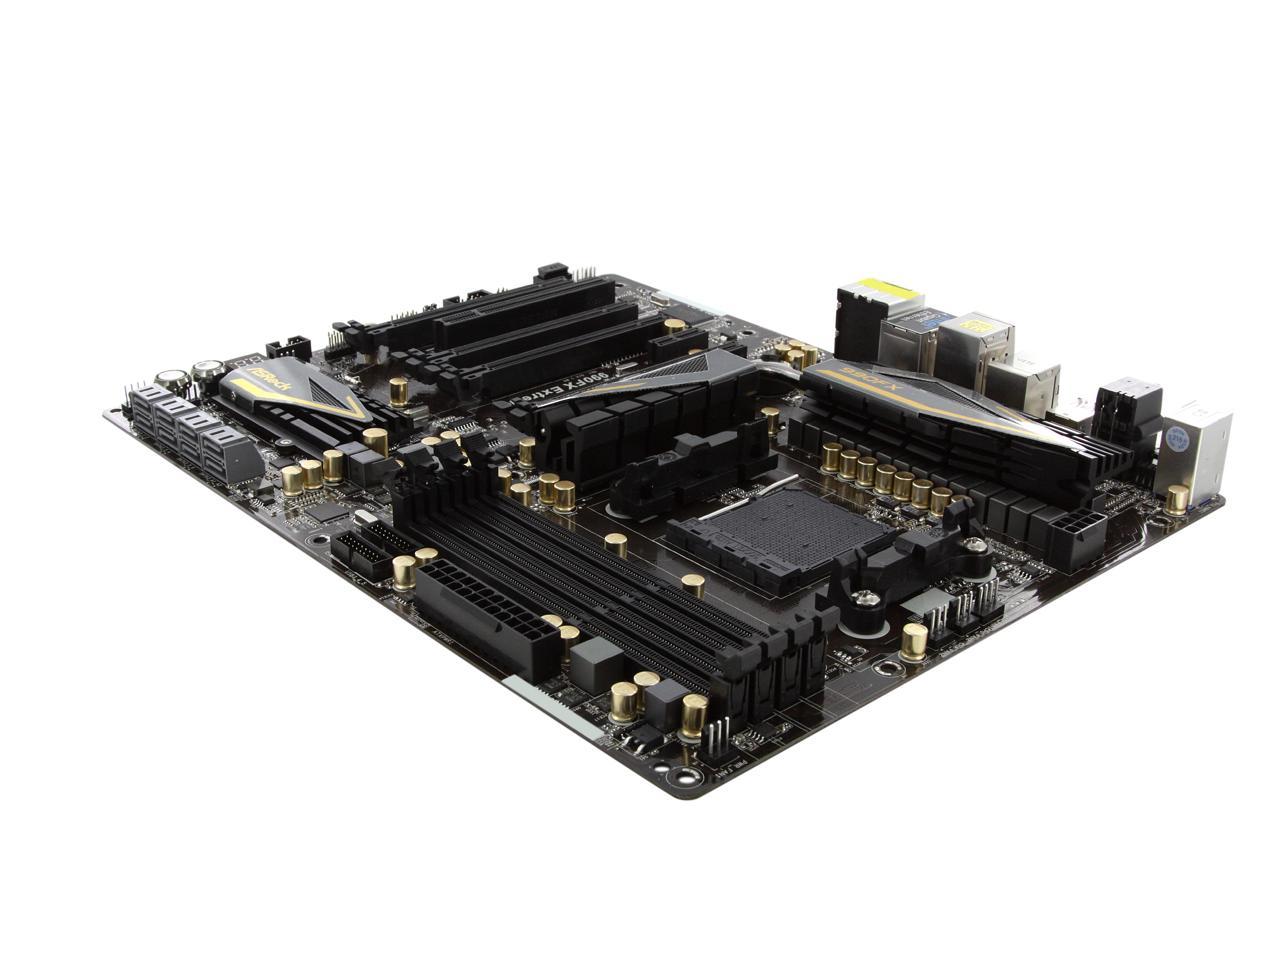 ASRock 990FX Extreme9 AM3+ ATX AMD Motherboard with UEFI BIOS - Newegg.com